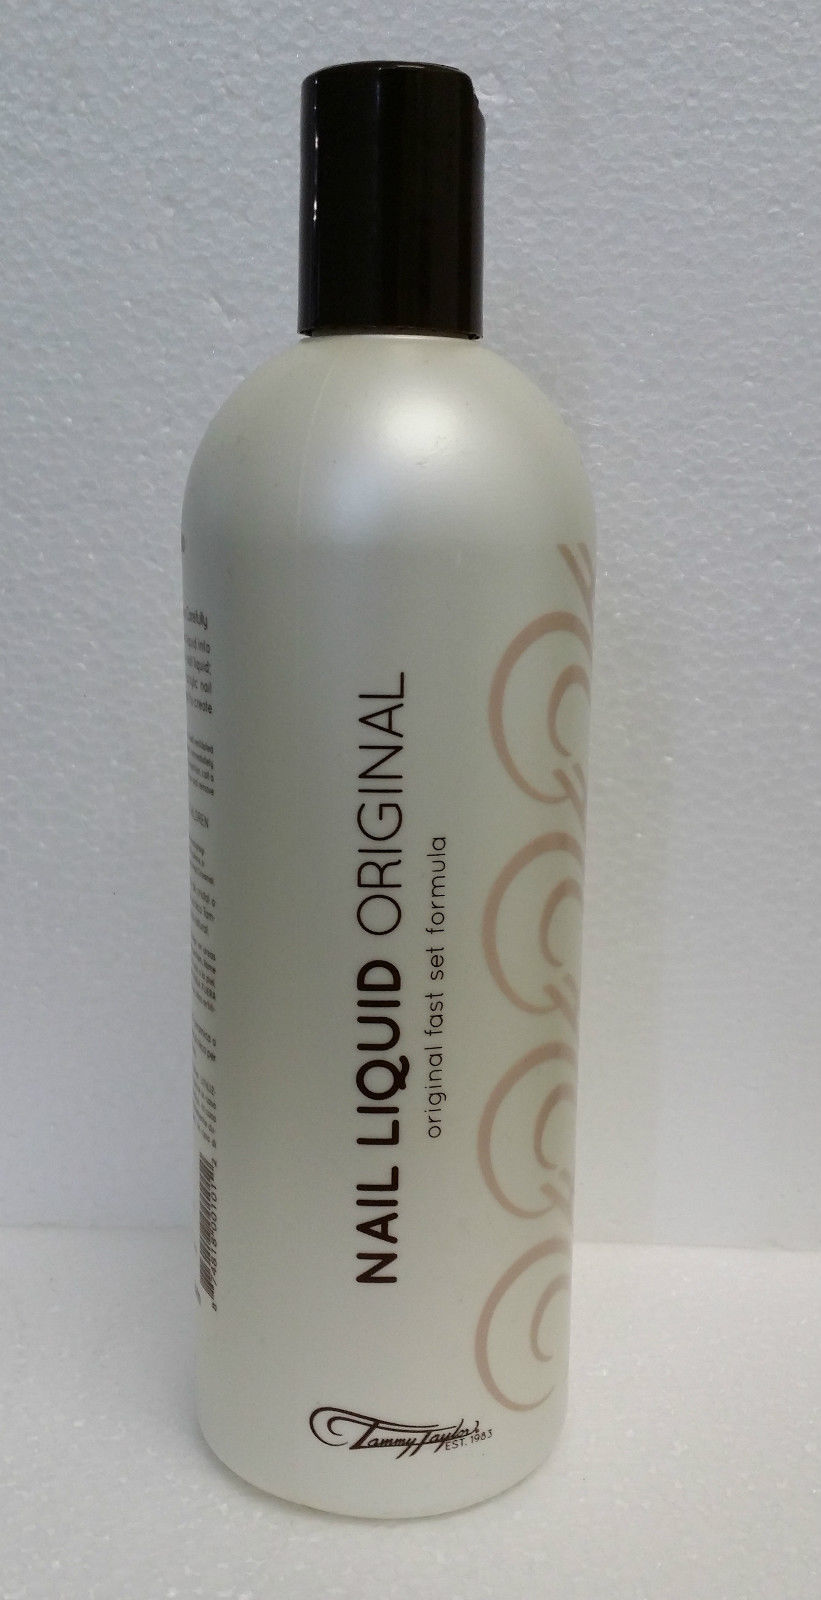 Salon Professional Nail Acrylic system liquid